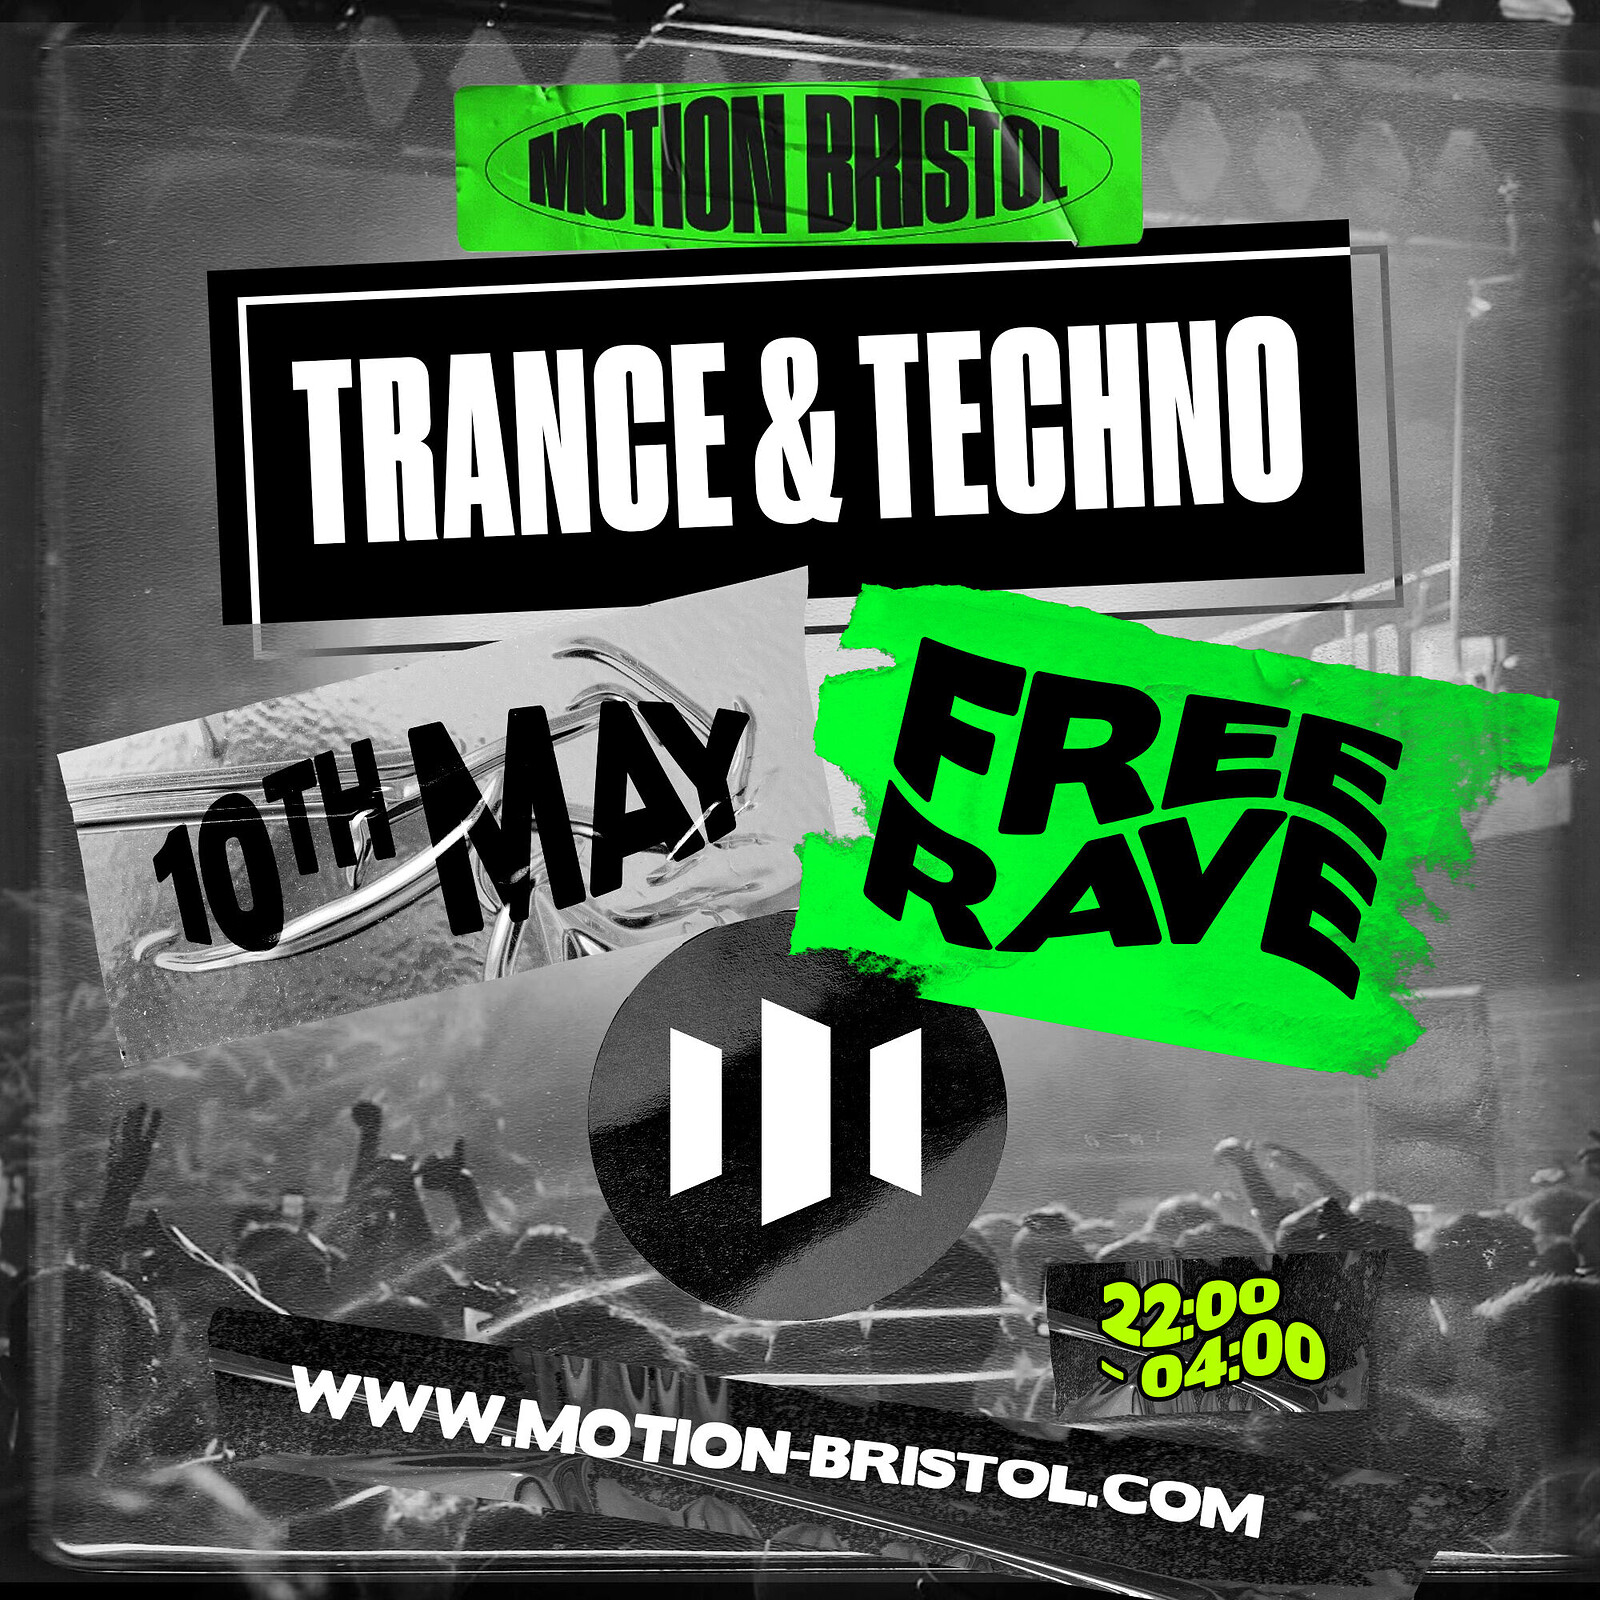 Trance & Techno Free Rave at Motion